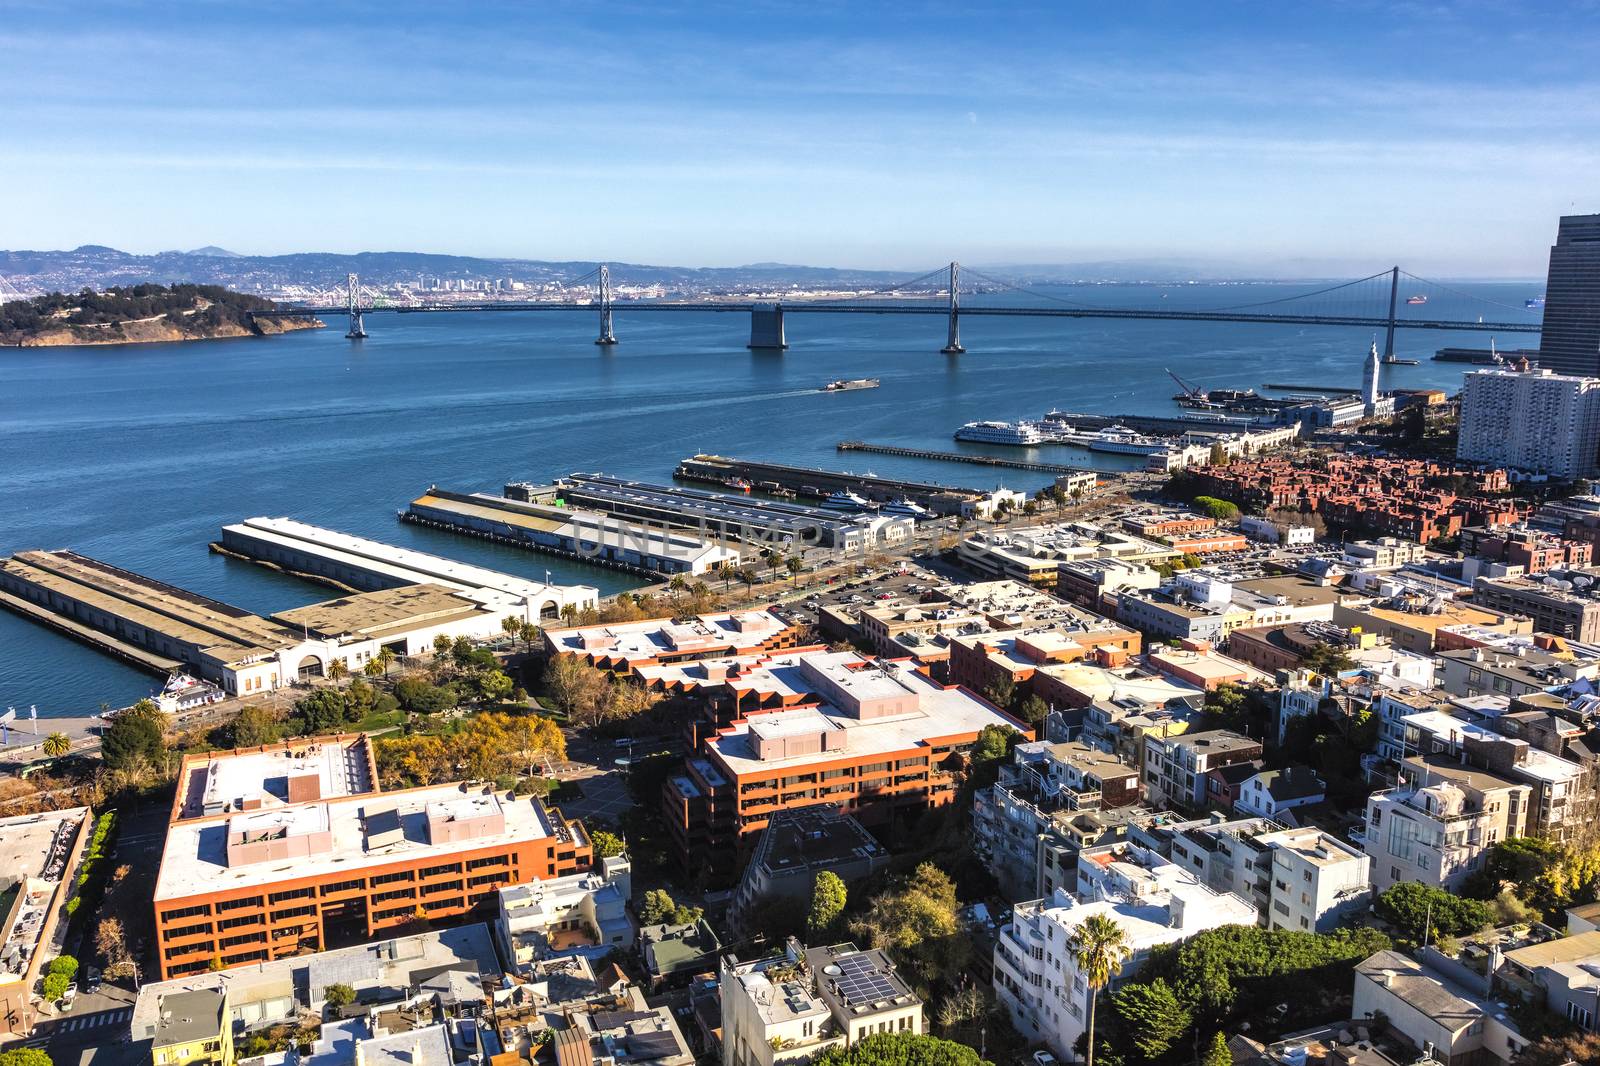 San Francisco Downtown, California with the Embarcadero and Bay Bridge